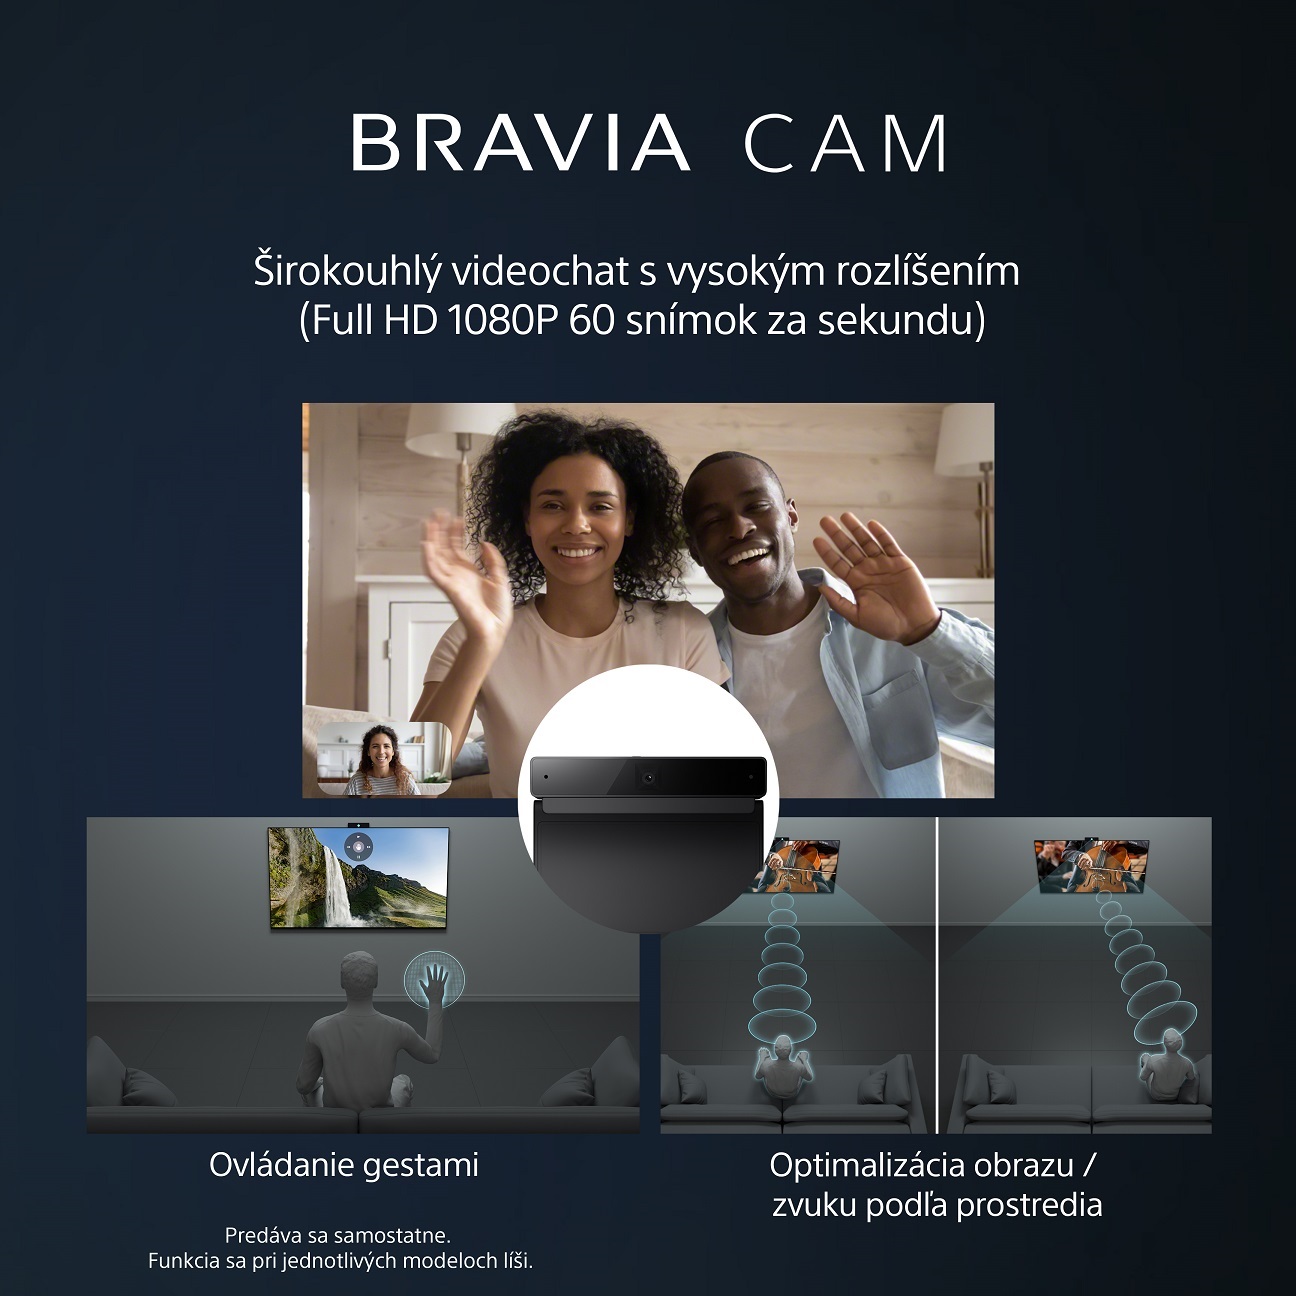 Smart LED televízor Sony Bravia XR-65X90L